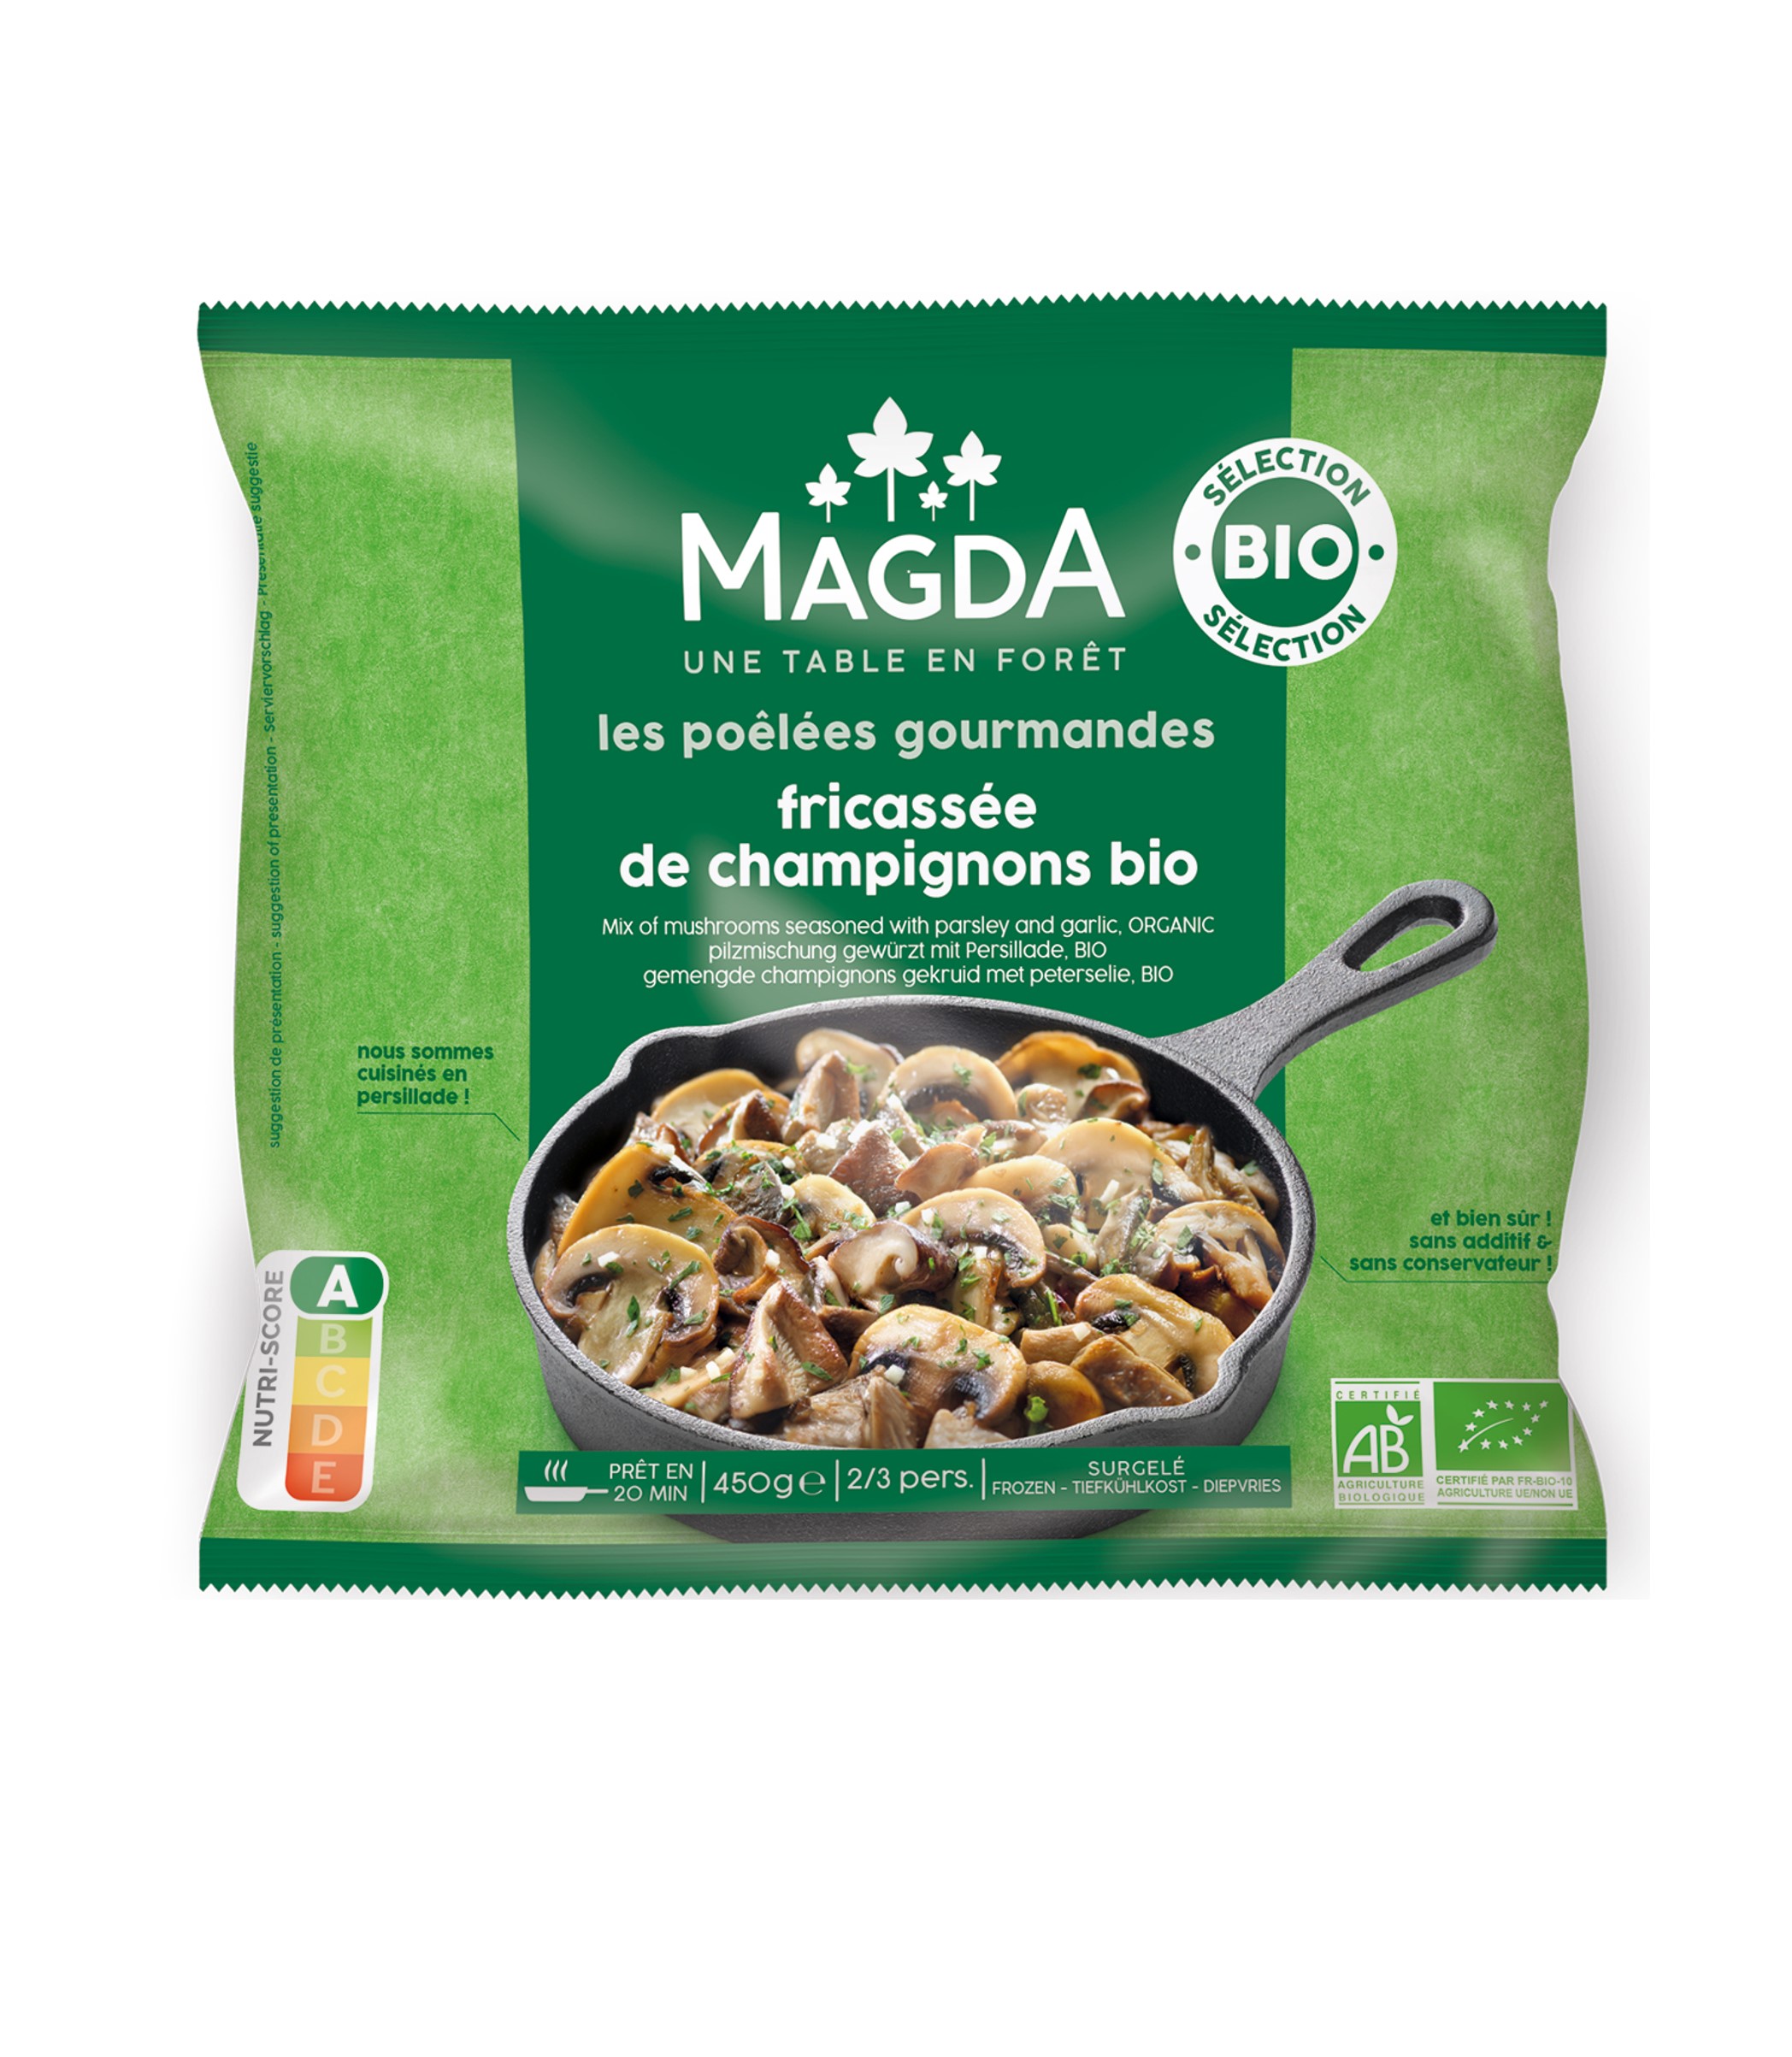 Mushroom mix with asparagus Magda